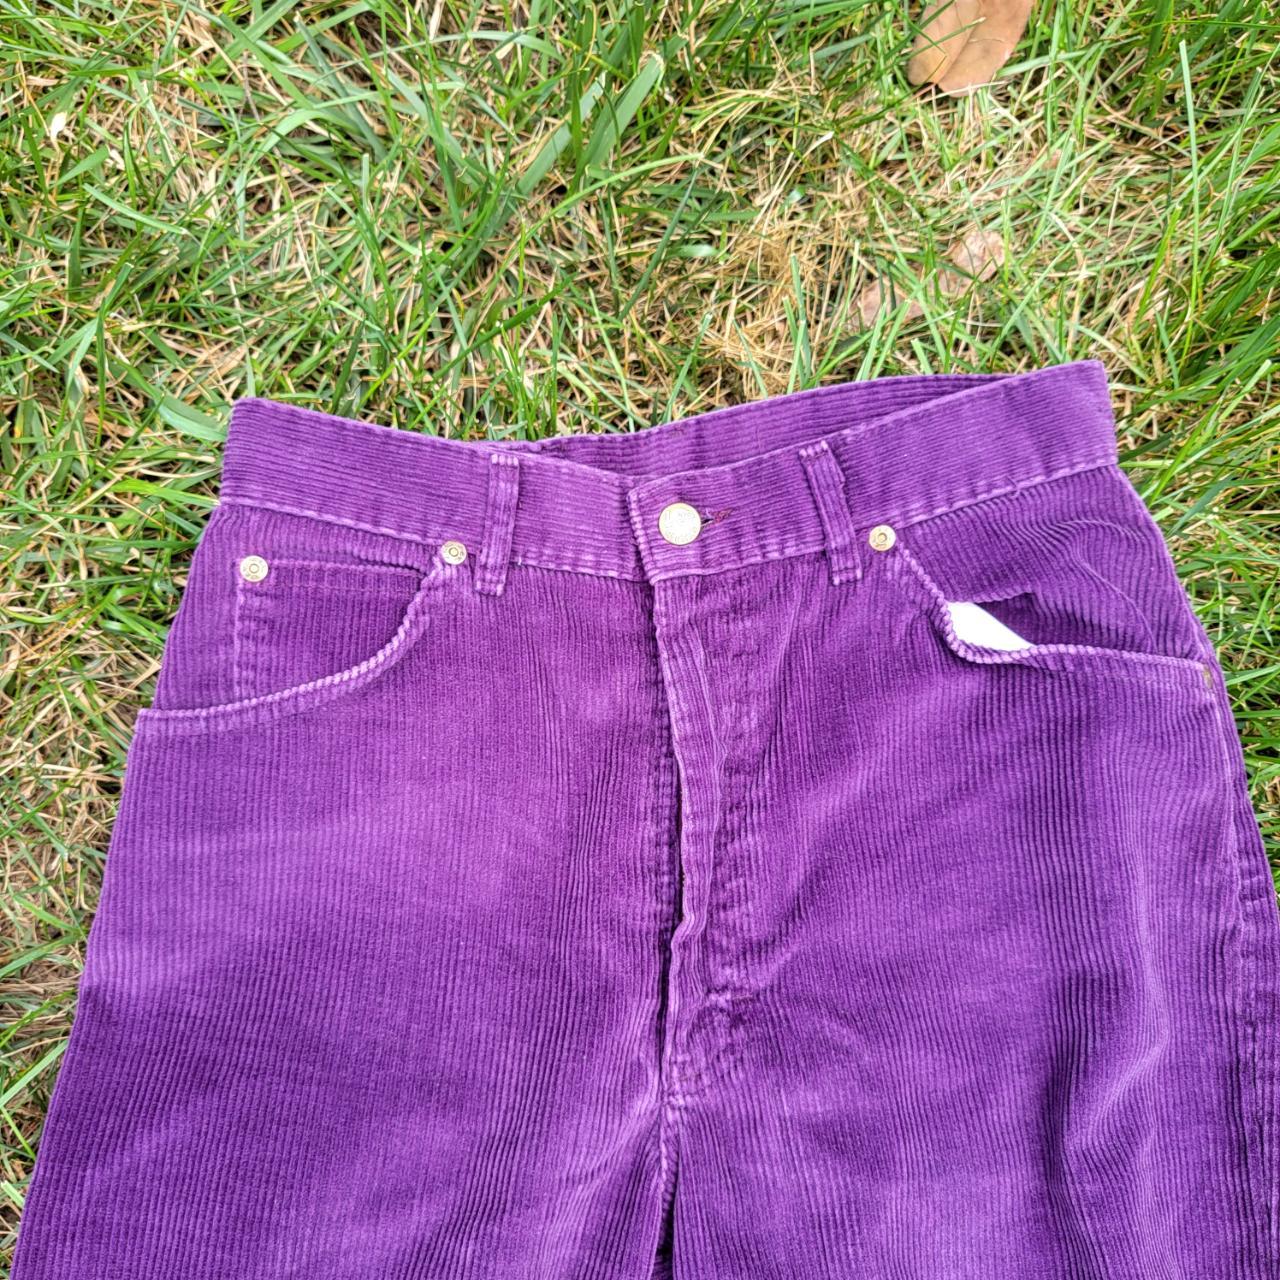 LEE purple corduroy jeans vintage 90s high waisted... - Depop